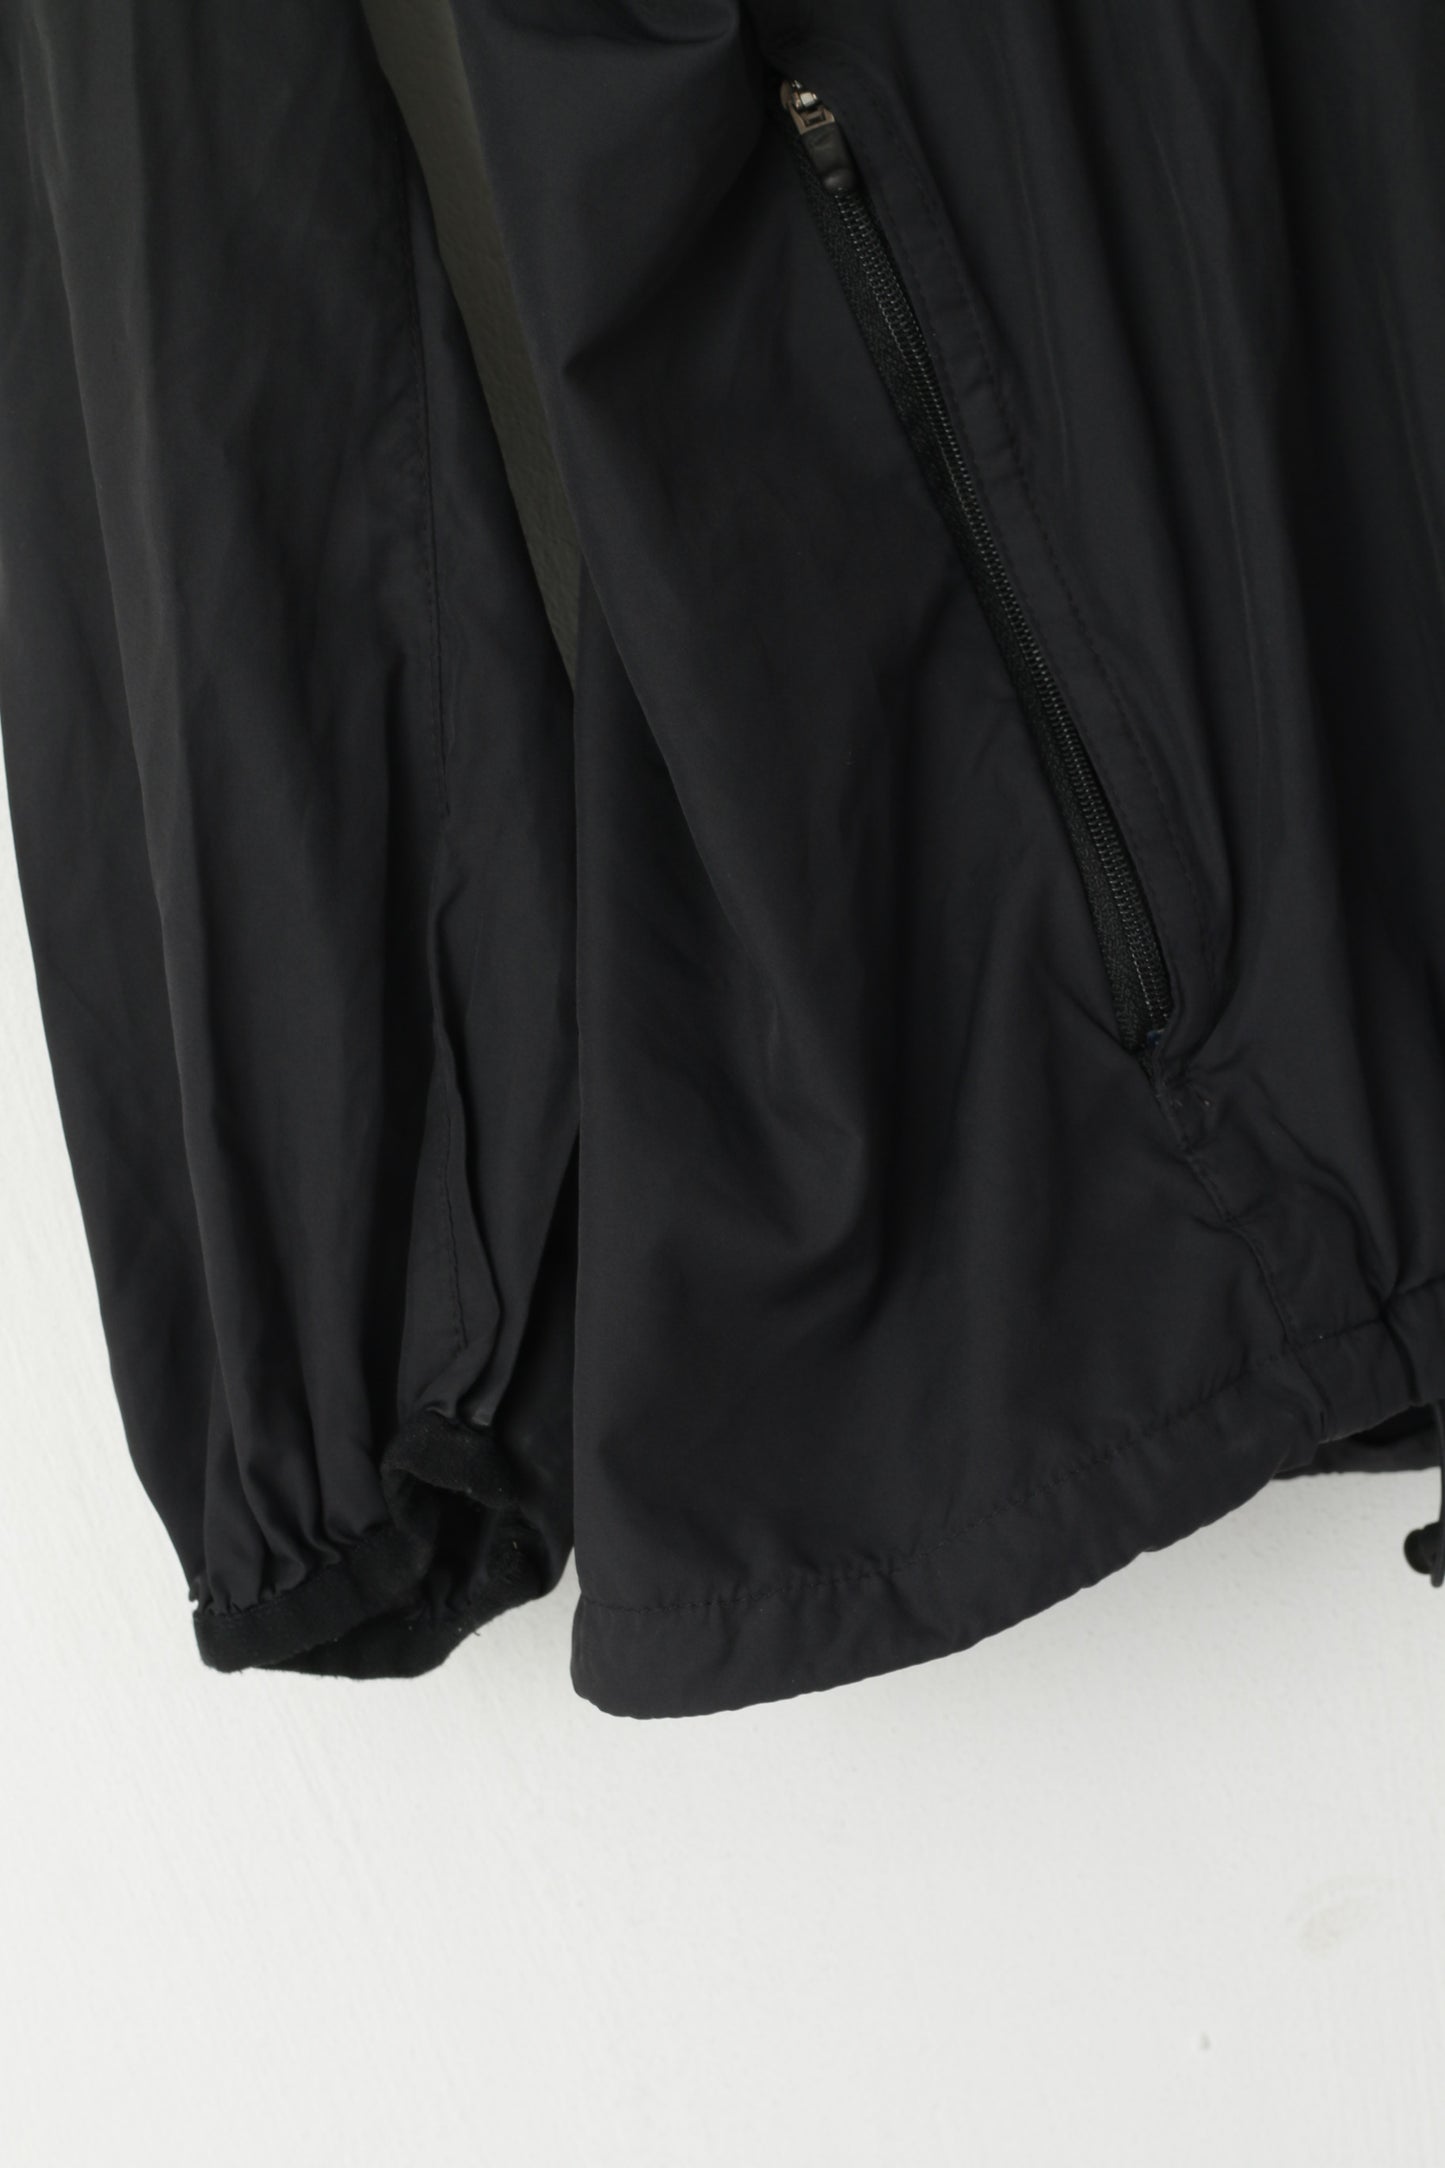 Nike Men L (M) Jacket Black Run Lightweight Activewear Breathable Zip Up Top